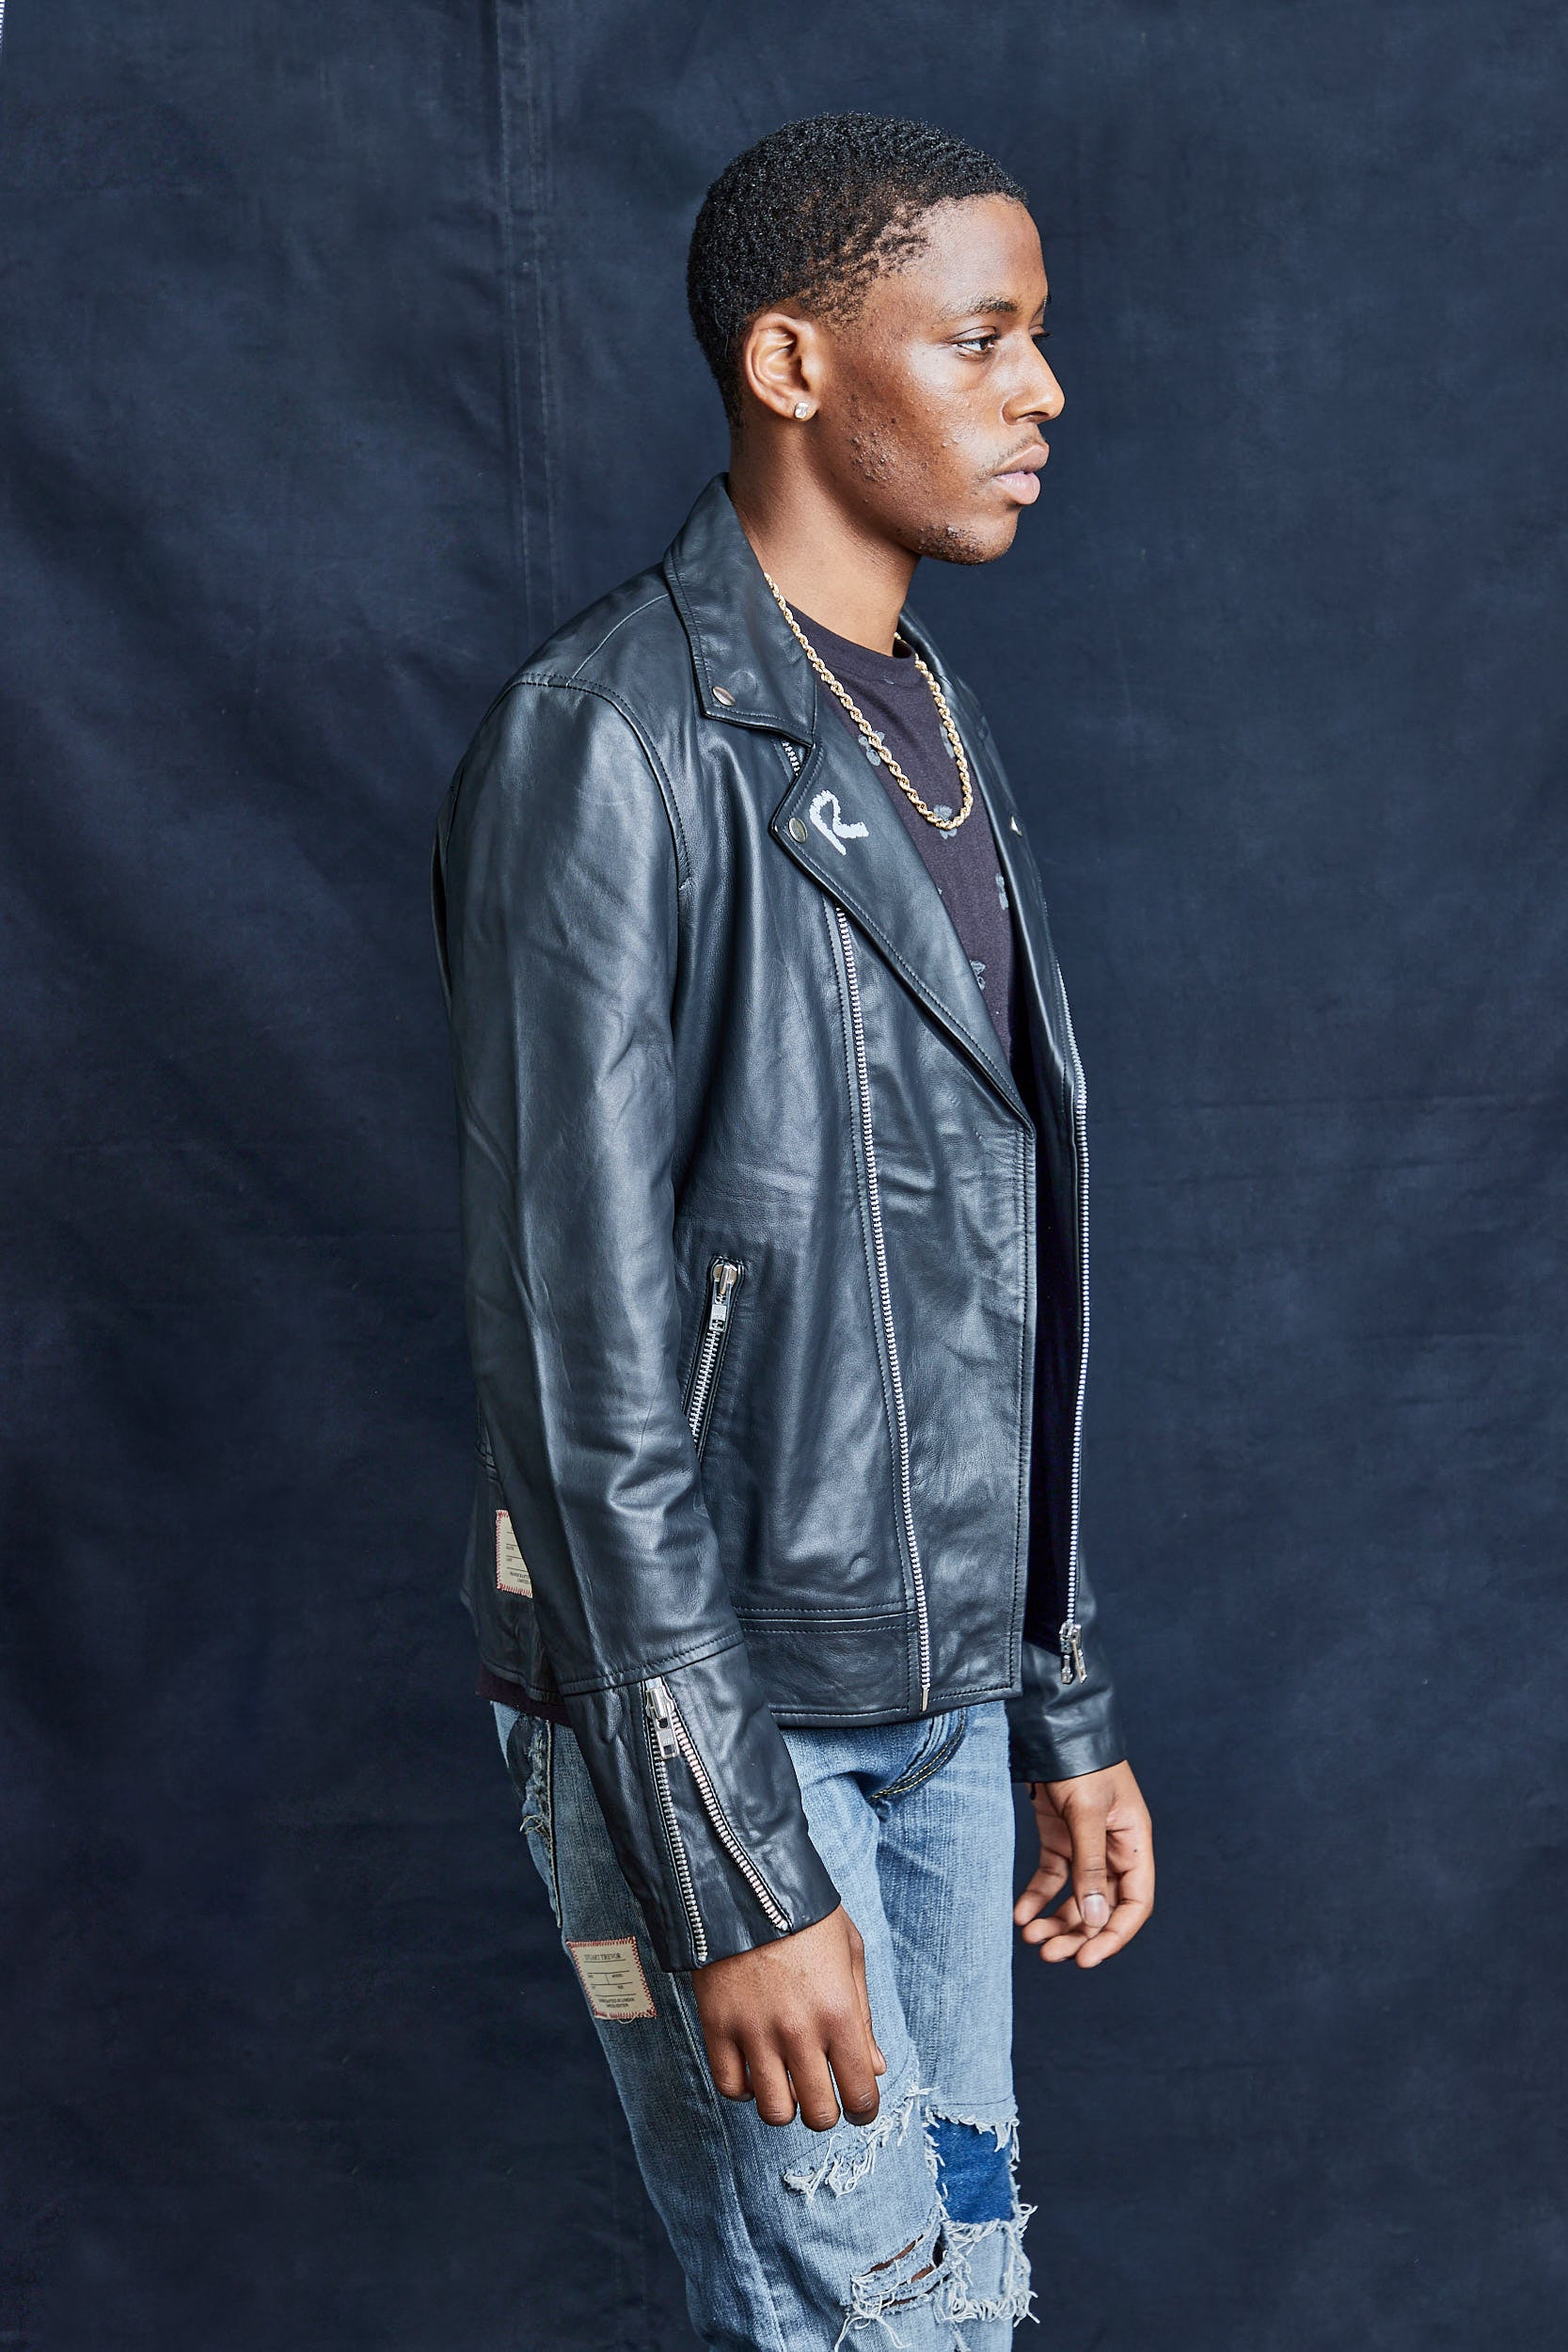 Brian Sleek Essential Leather Jacket – CW Leather